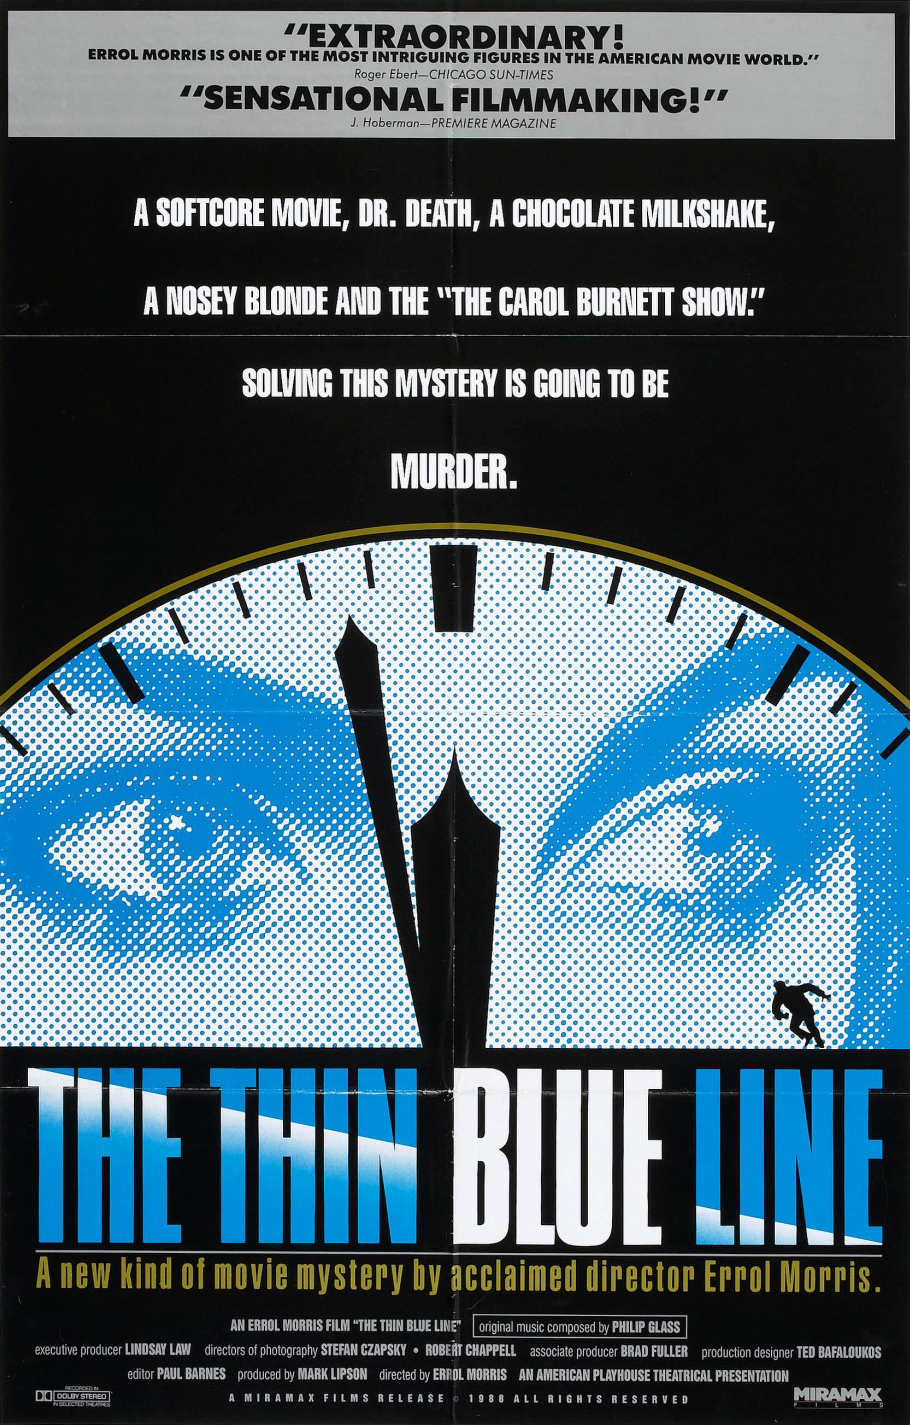 Nonton film The Thin Blue Line layarkaca21 indoxx1 ganool online streaming terbaru